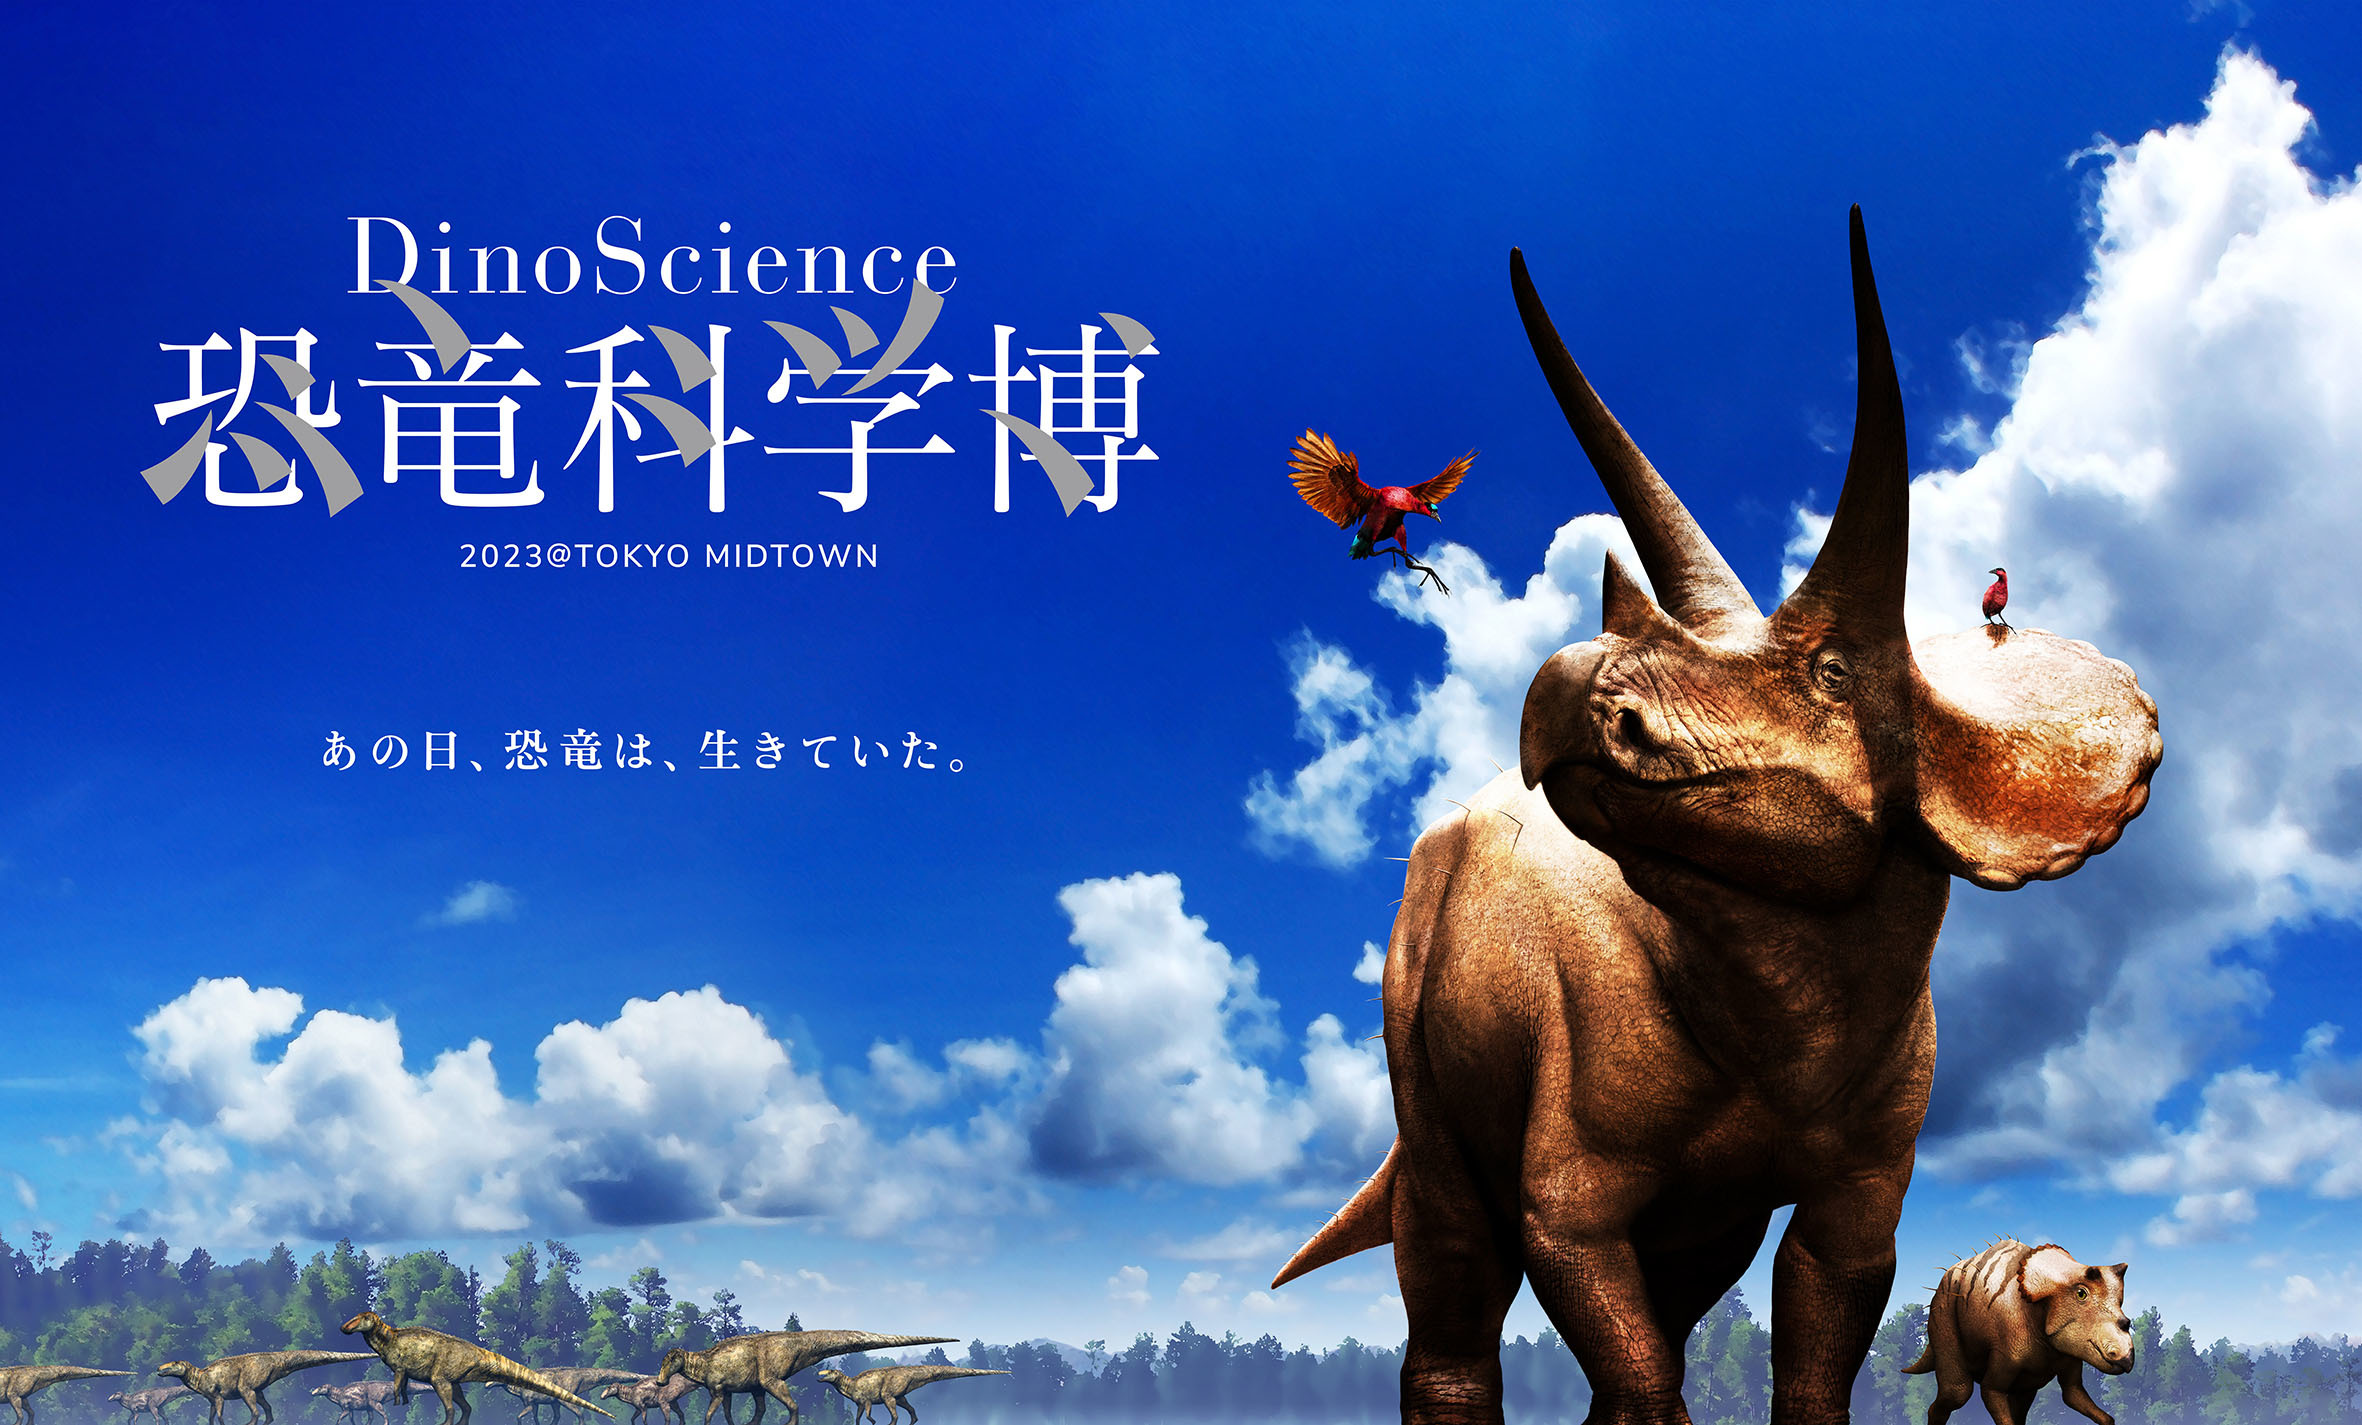 『DinoScience 恐竜科学博 2023@TOKYO MIDTOWN』